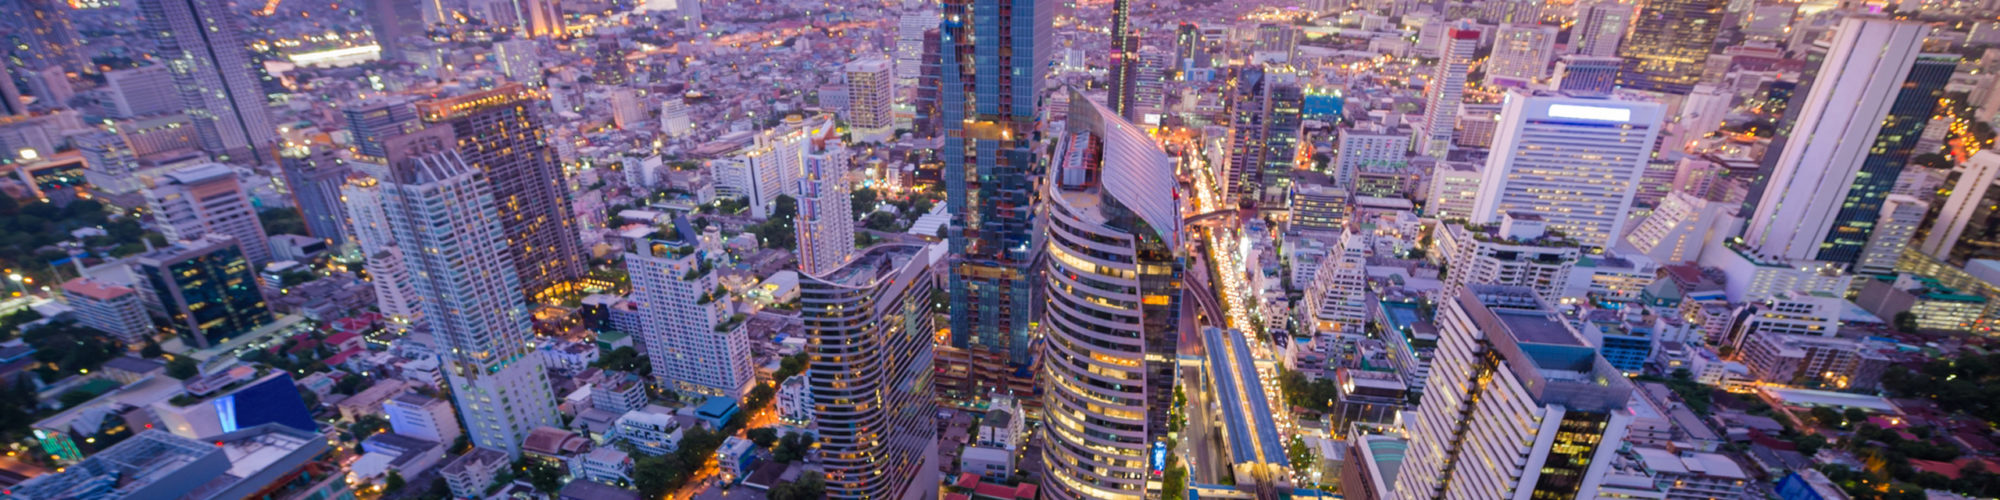 Bangkok travel agents packages deals